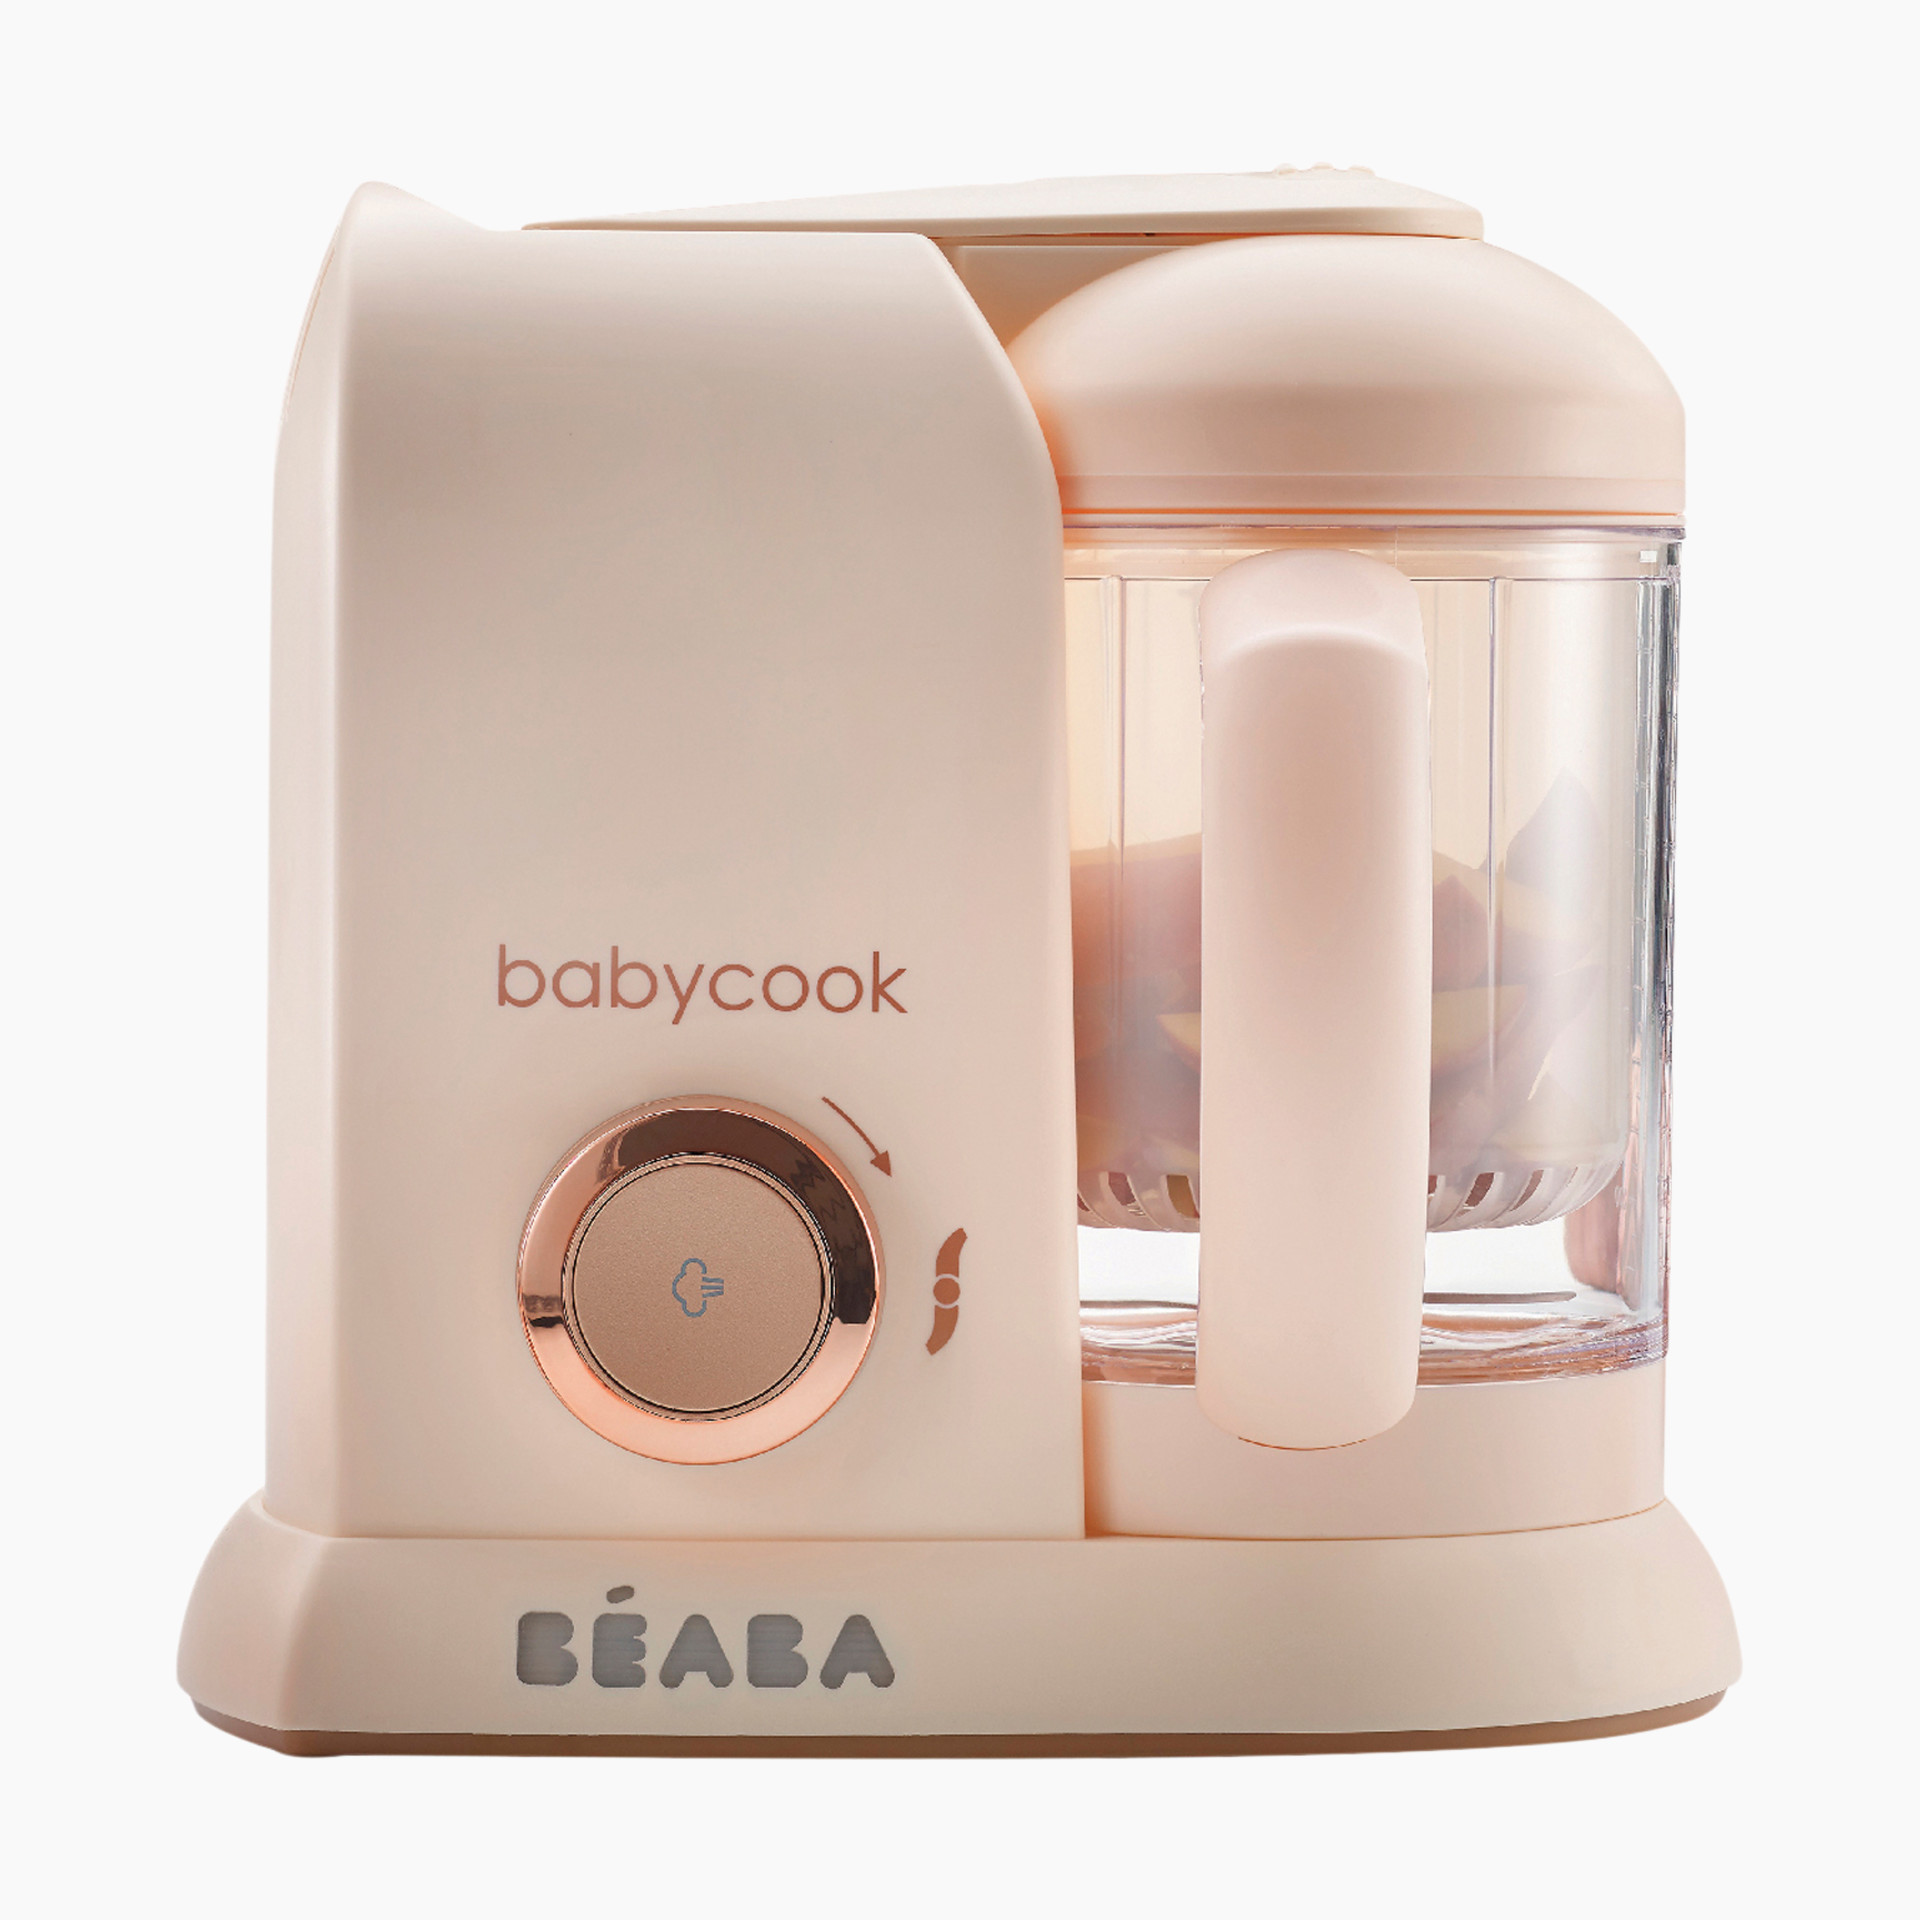 Beaba - Babycook Solo Homemade Baby Food Maker, Oat